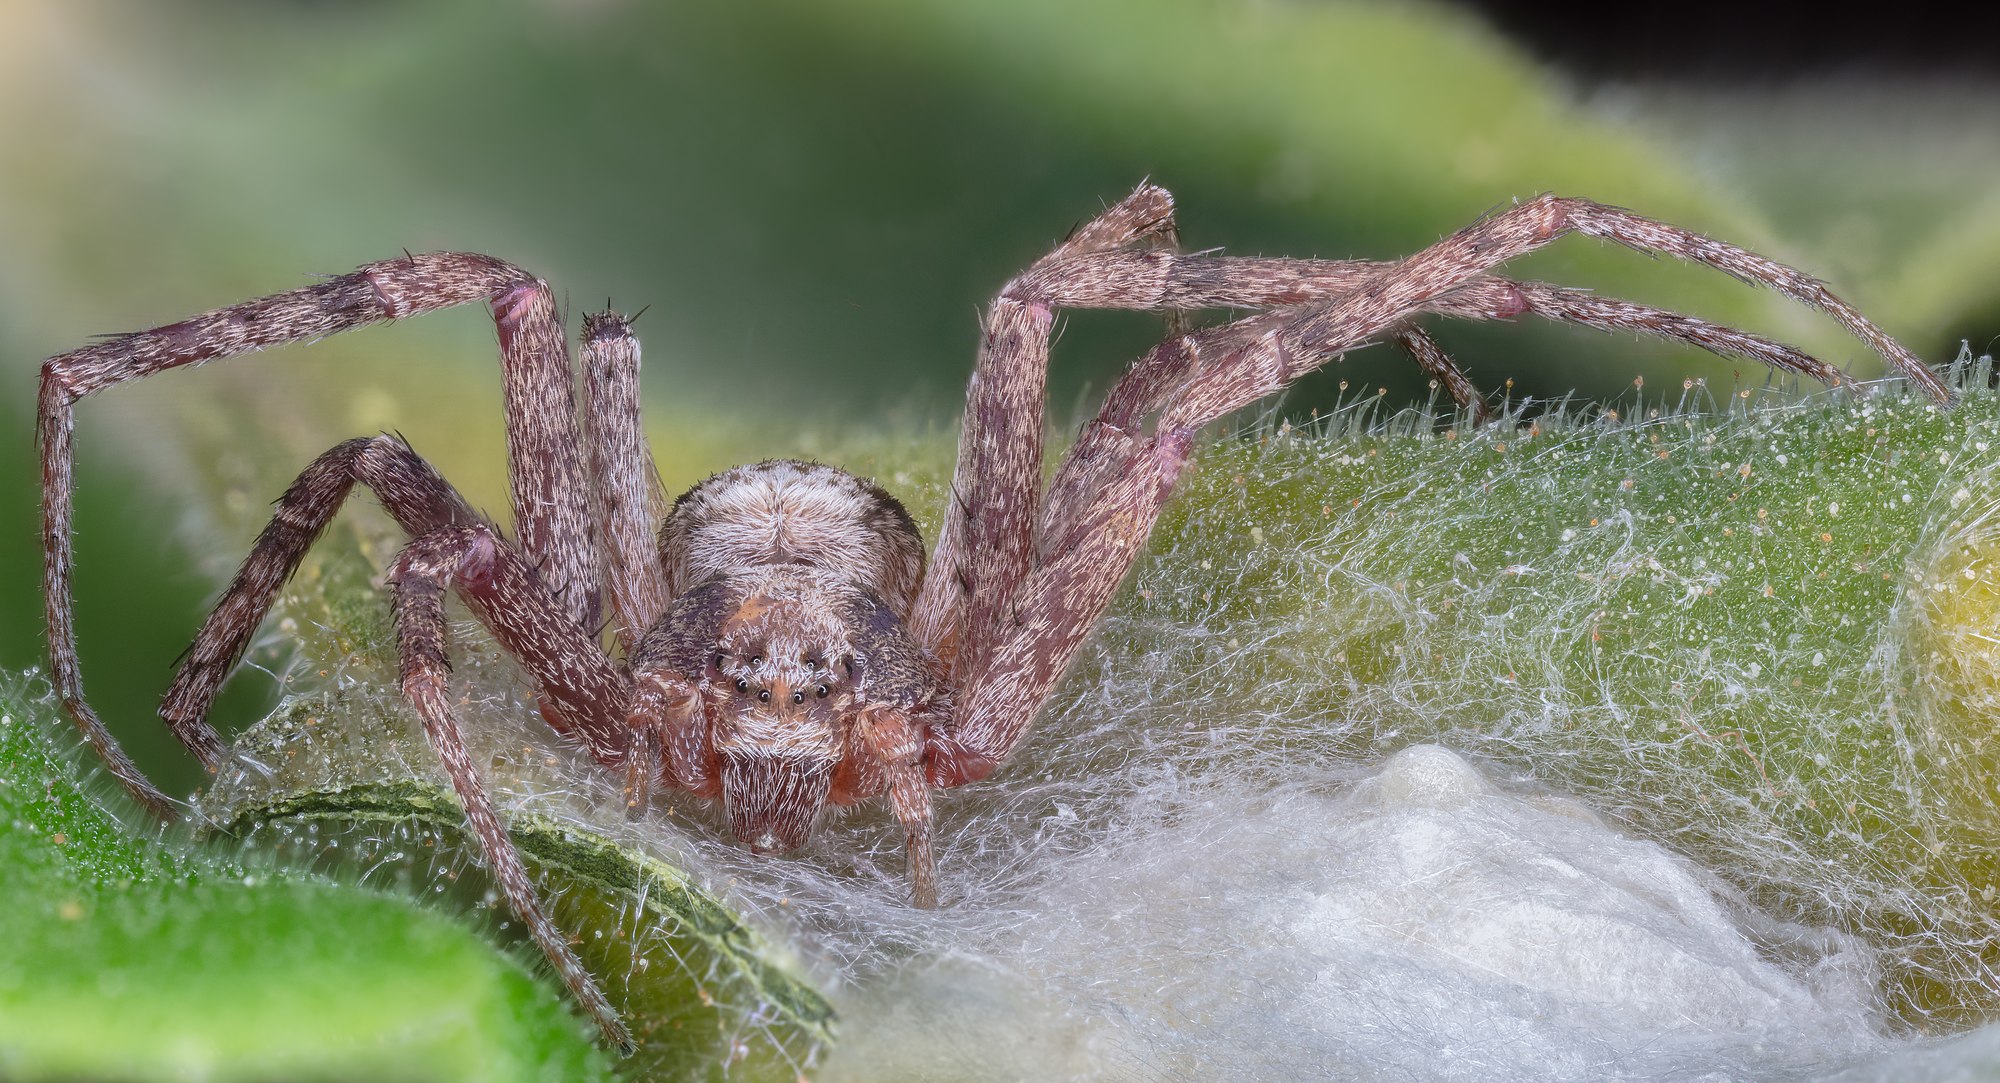 Female Wandering crab spider (Philodromus aureolus) with her egg sac, Hartelholz forest, Munich, Germany.